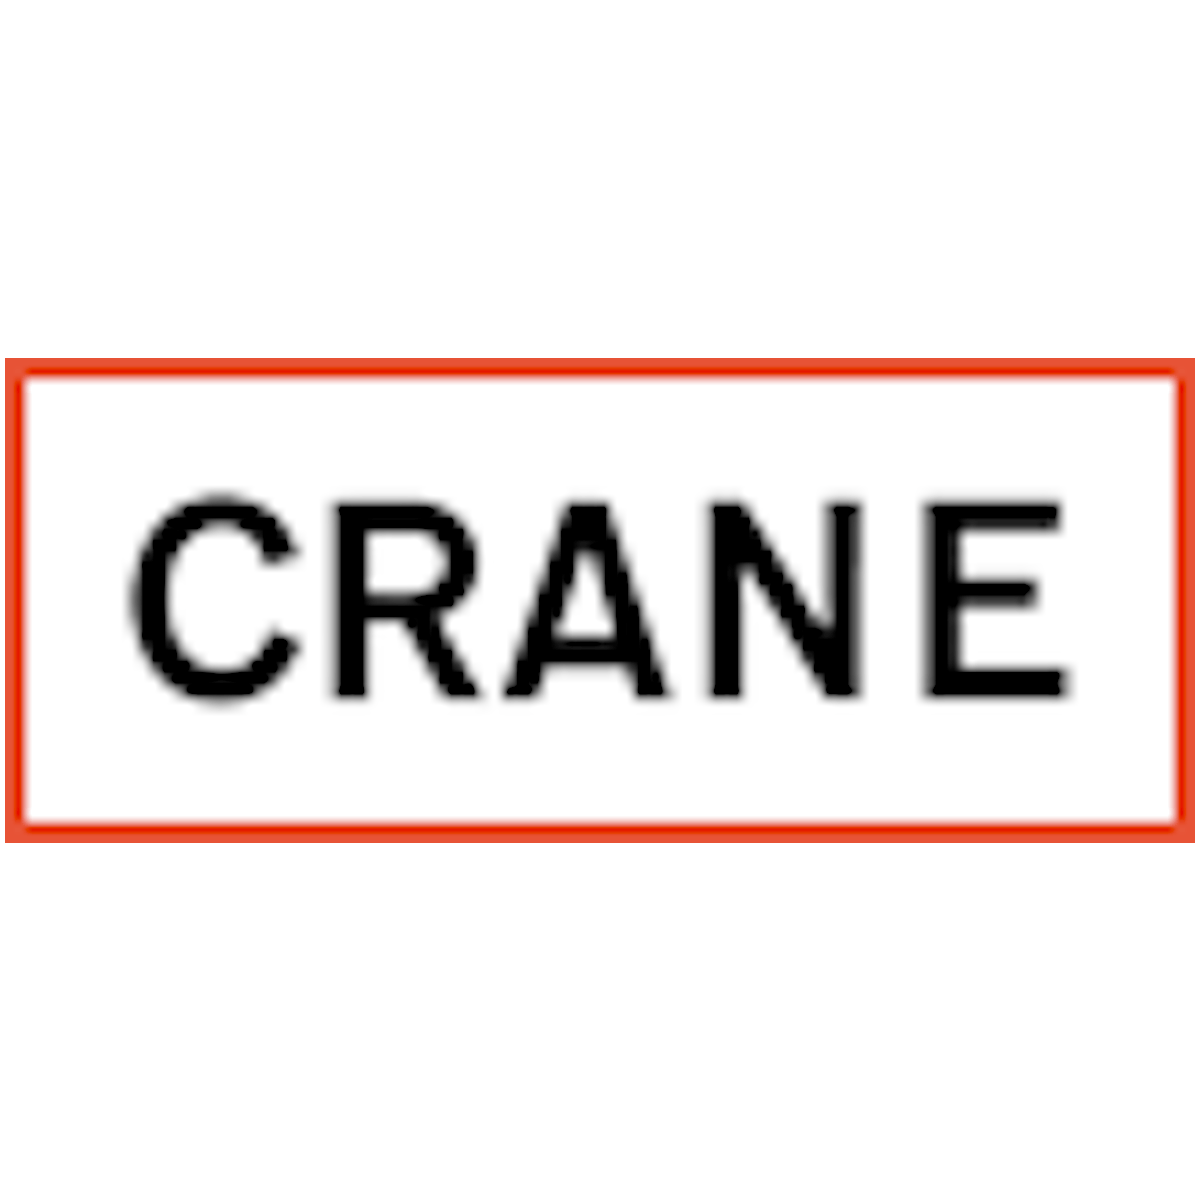 Cranelogo 09 10278423